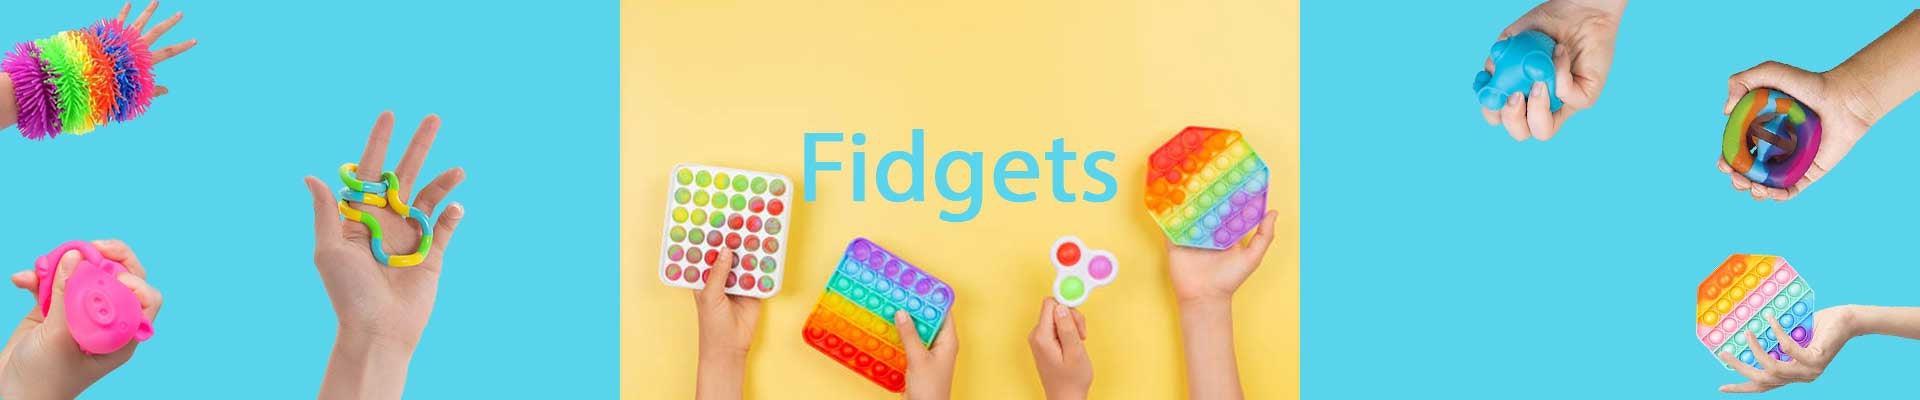 Tangle Fidget Toy, Energize Learners